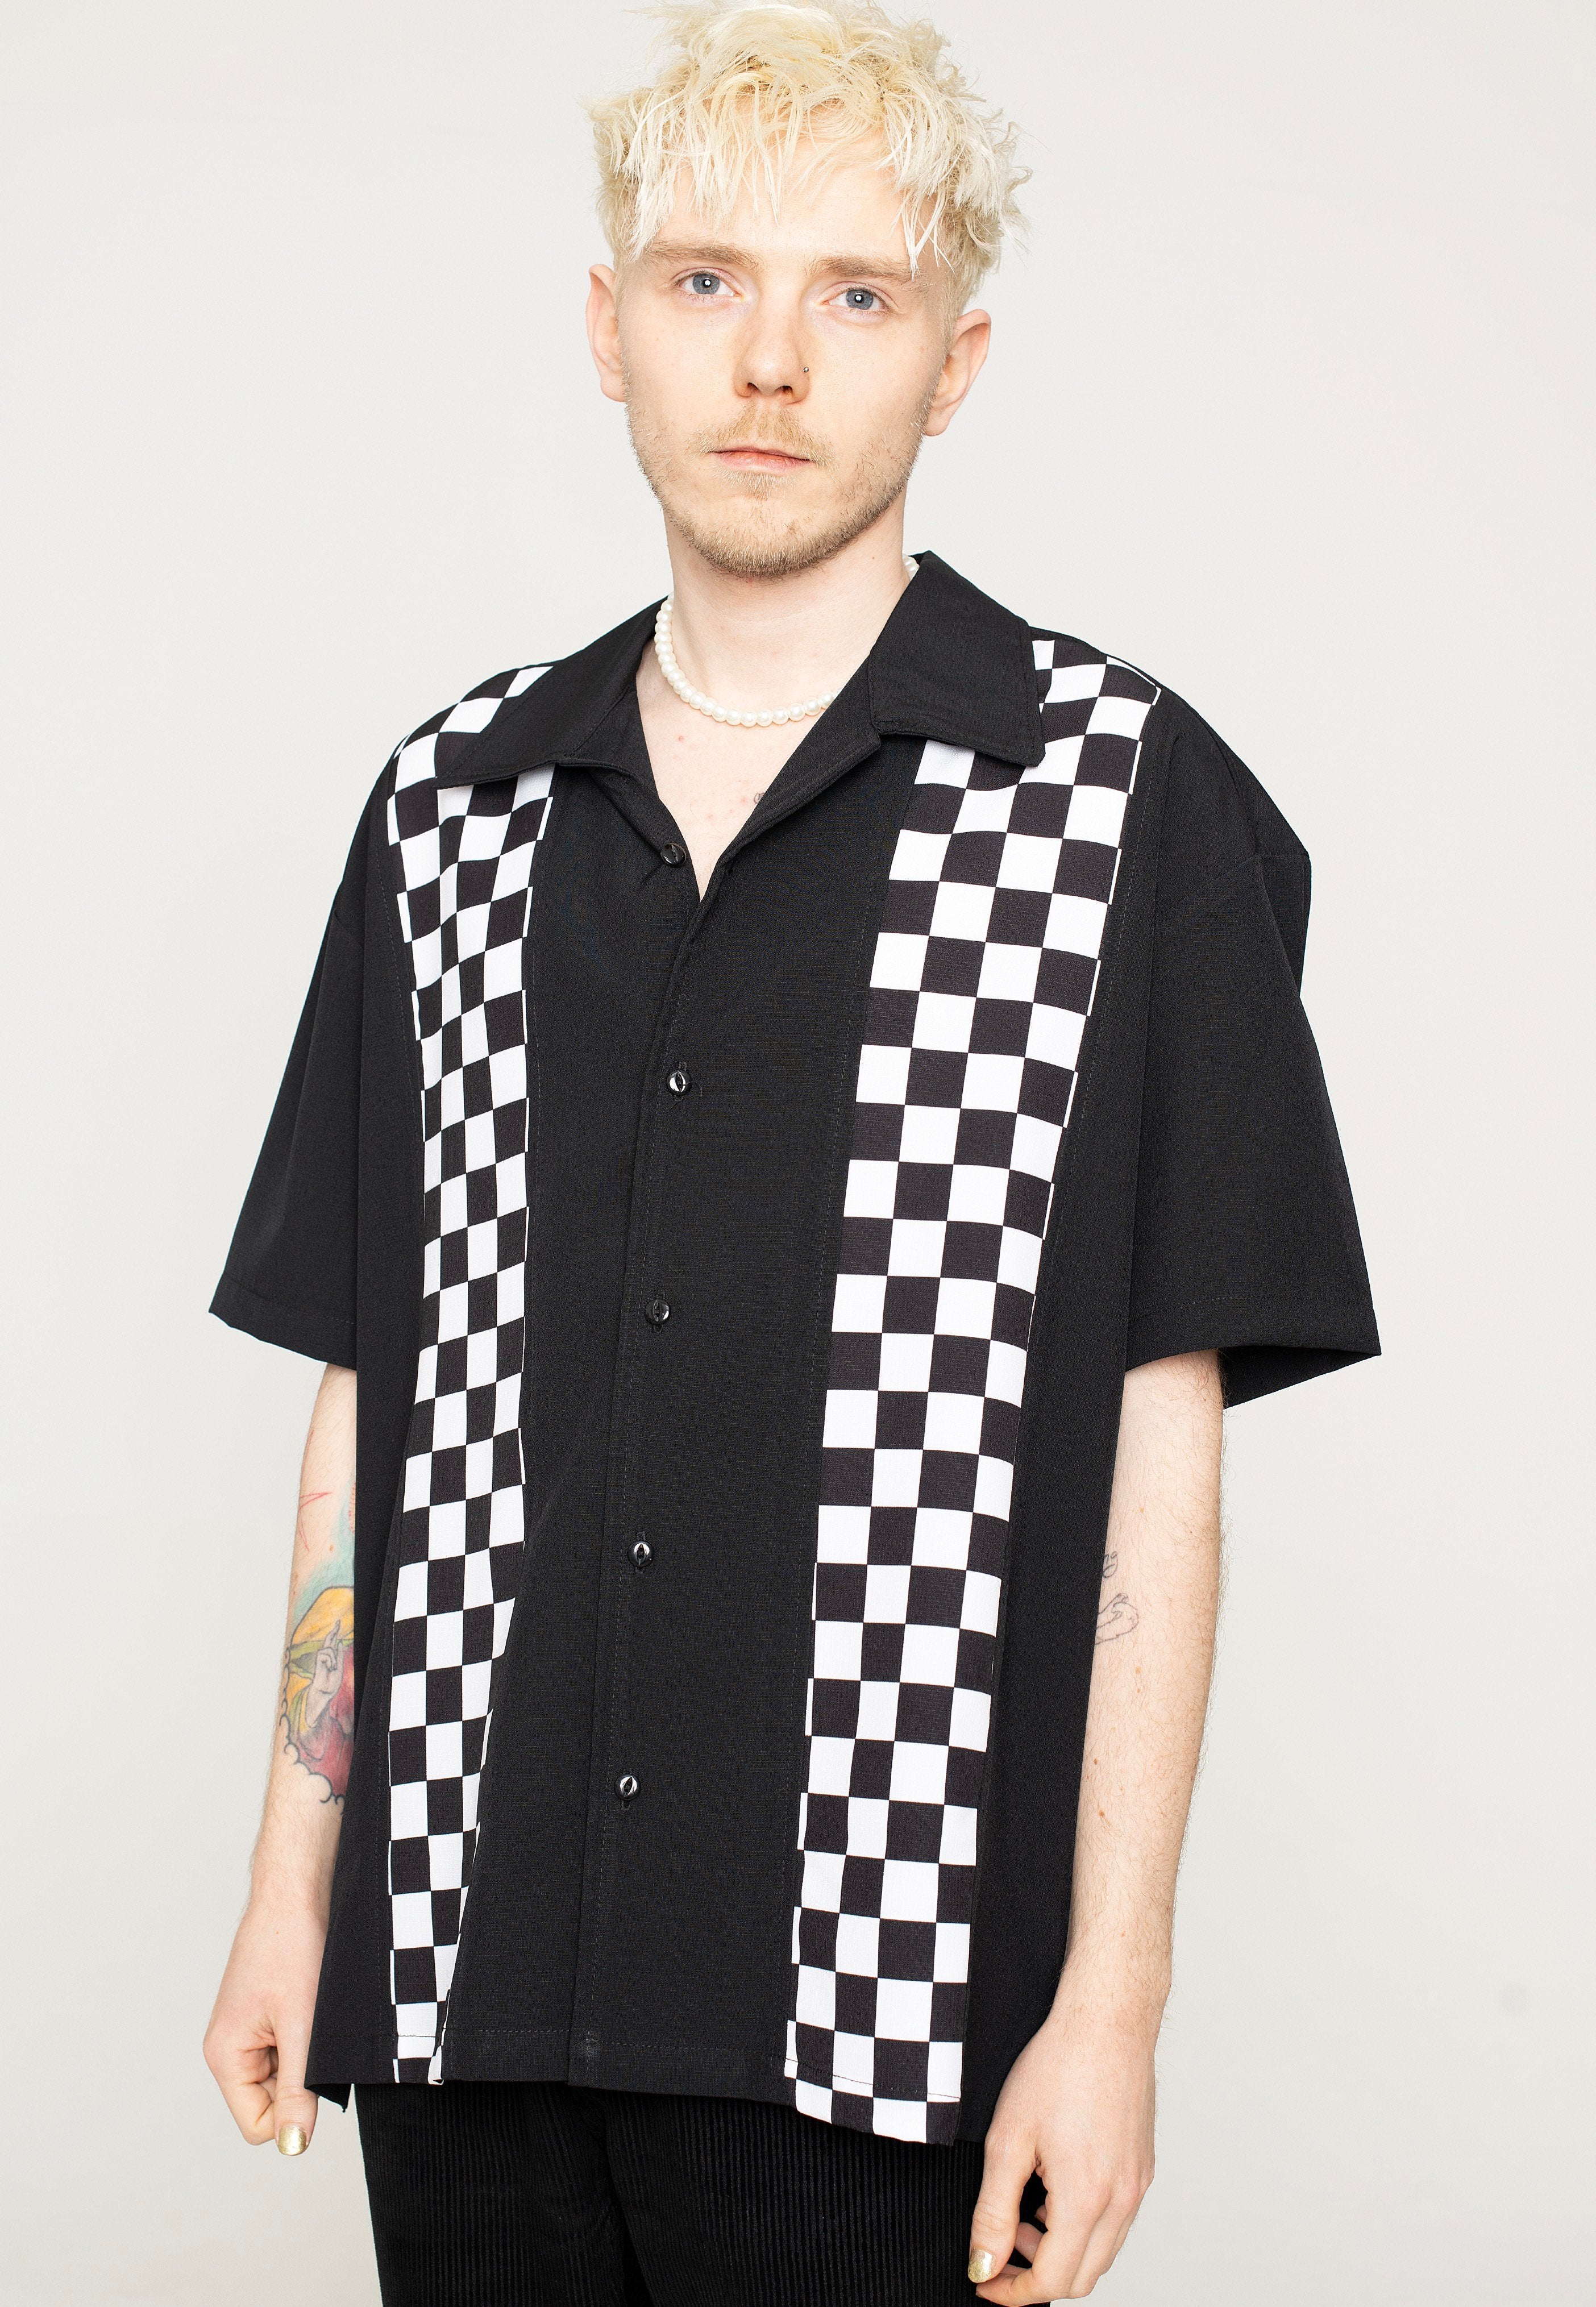 Steady Clothing - Checkered Mini Panel Black/White - Shirt